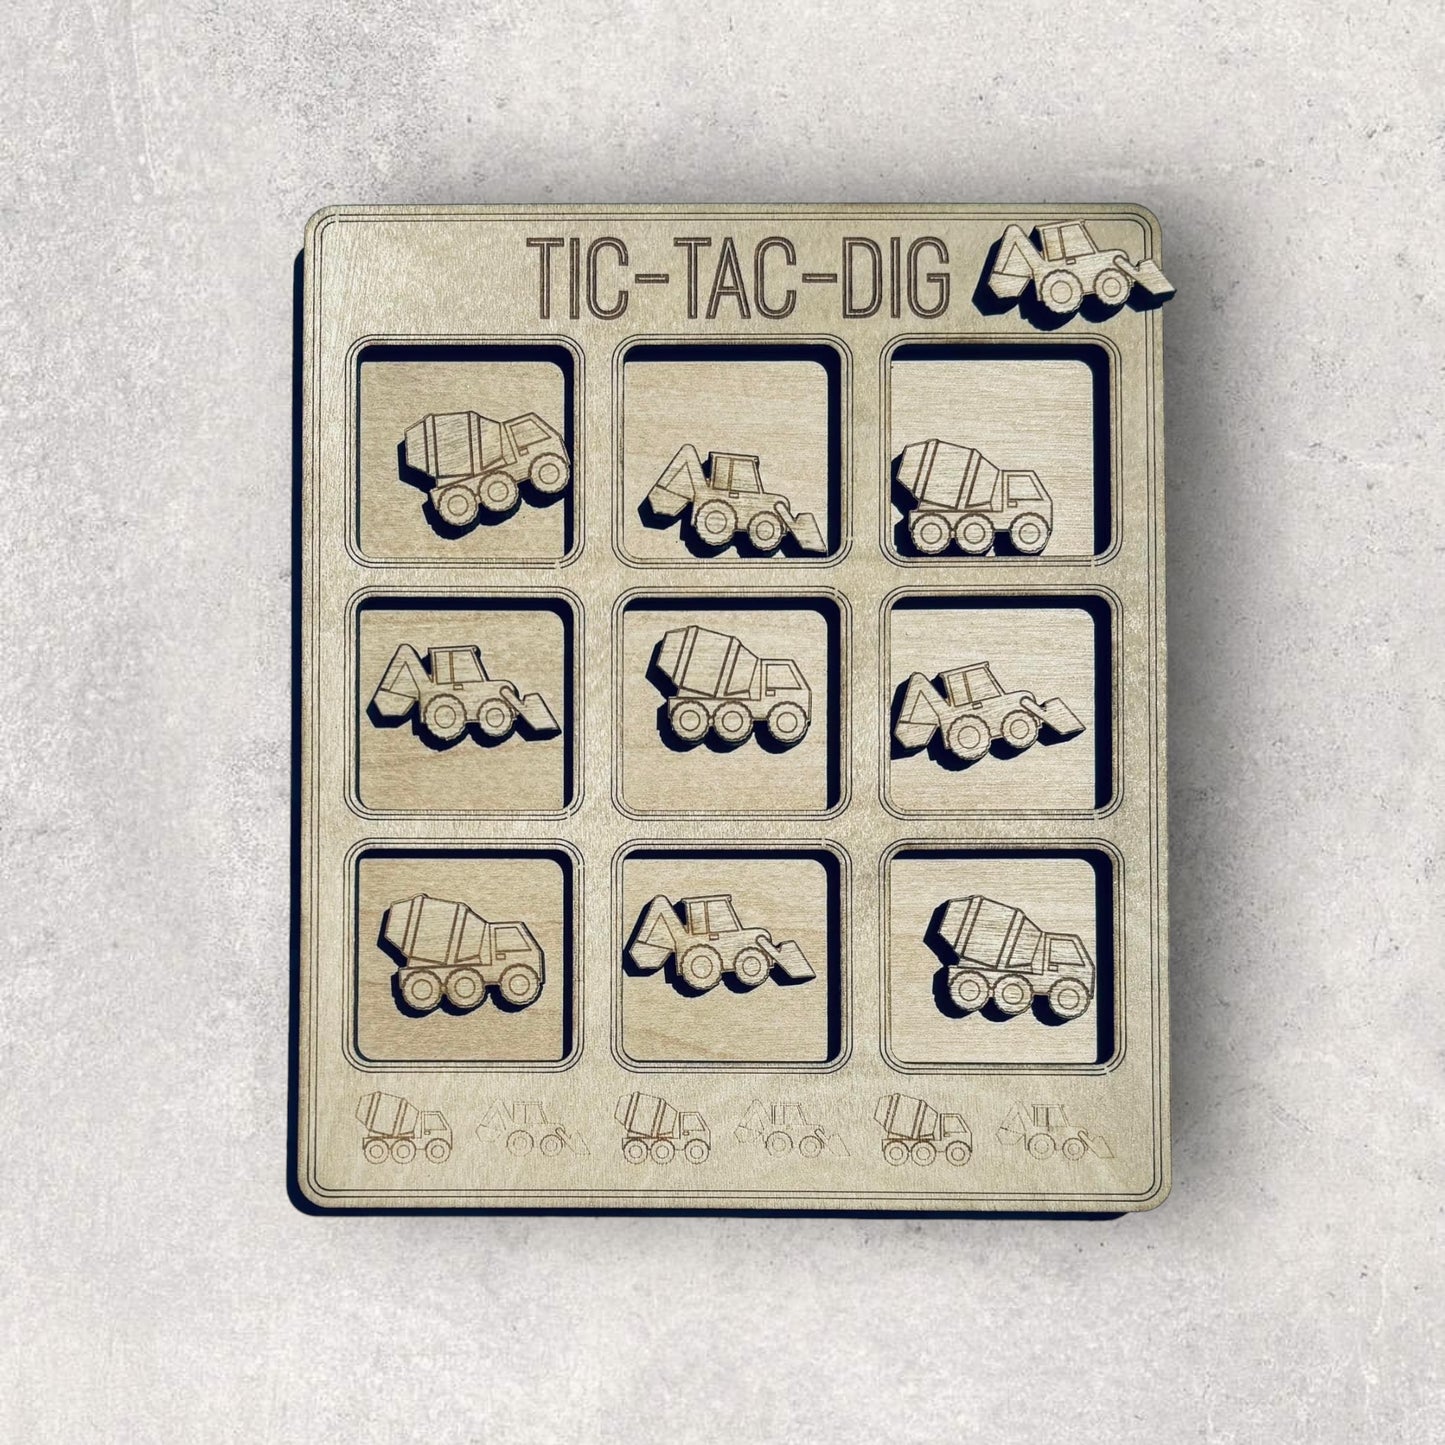 Themed Tic Tac Toe Games